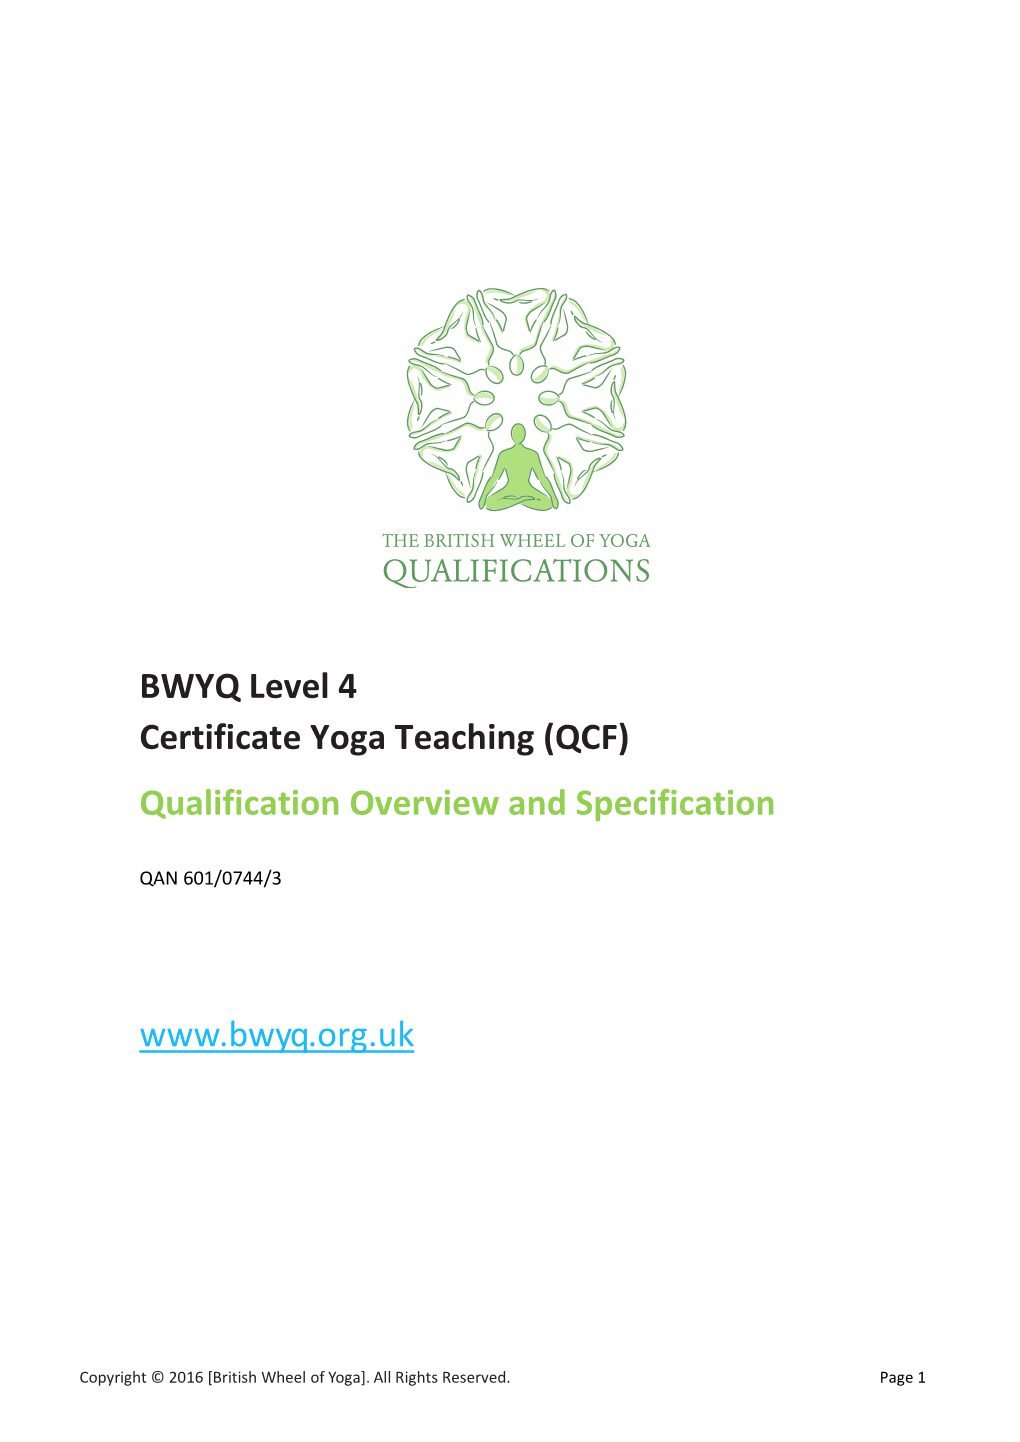 BWYQ Level 4 Certificate Yoga Teaching (QCF)